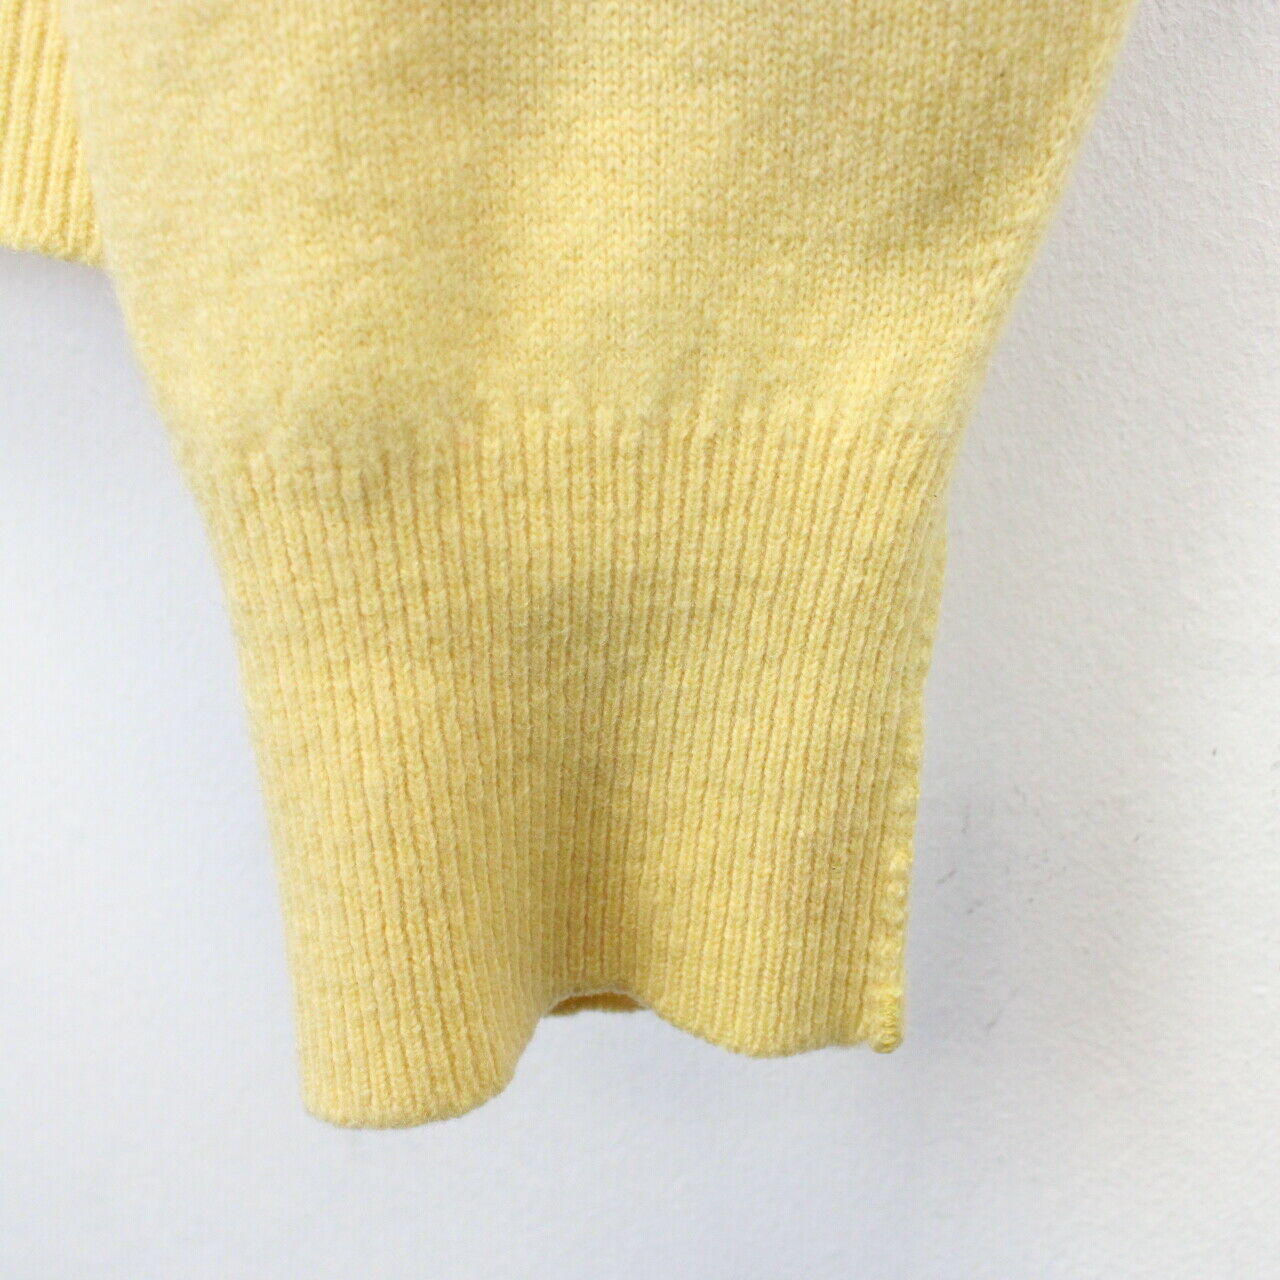 BURBERRYS 80s Knit Sweatshirt Yellow | Large